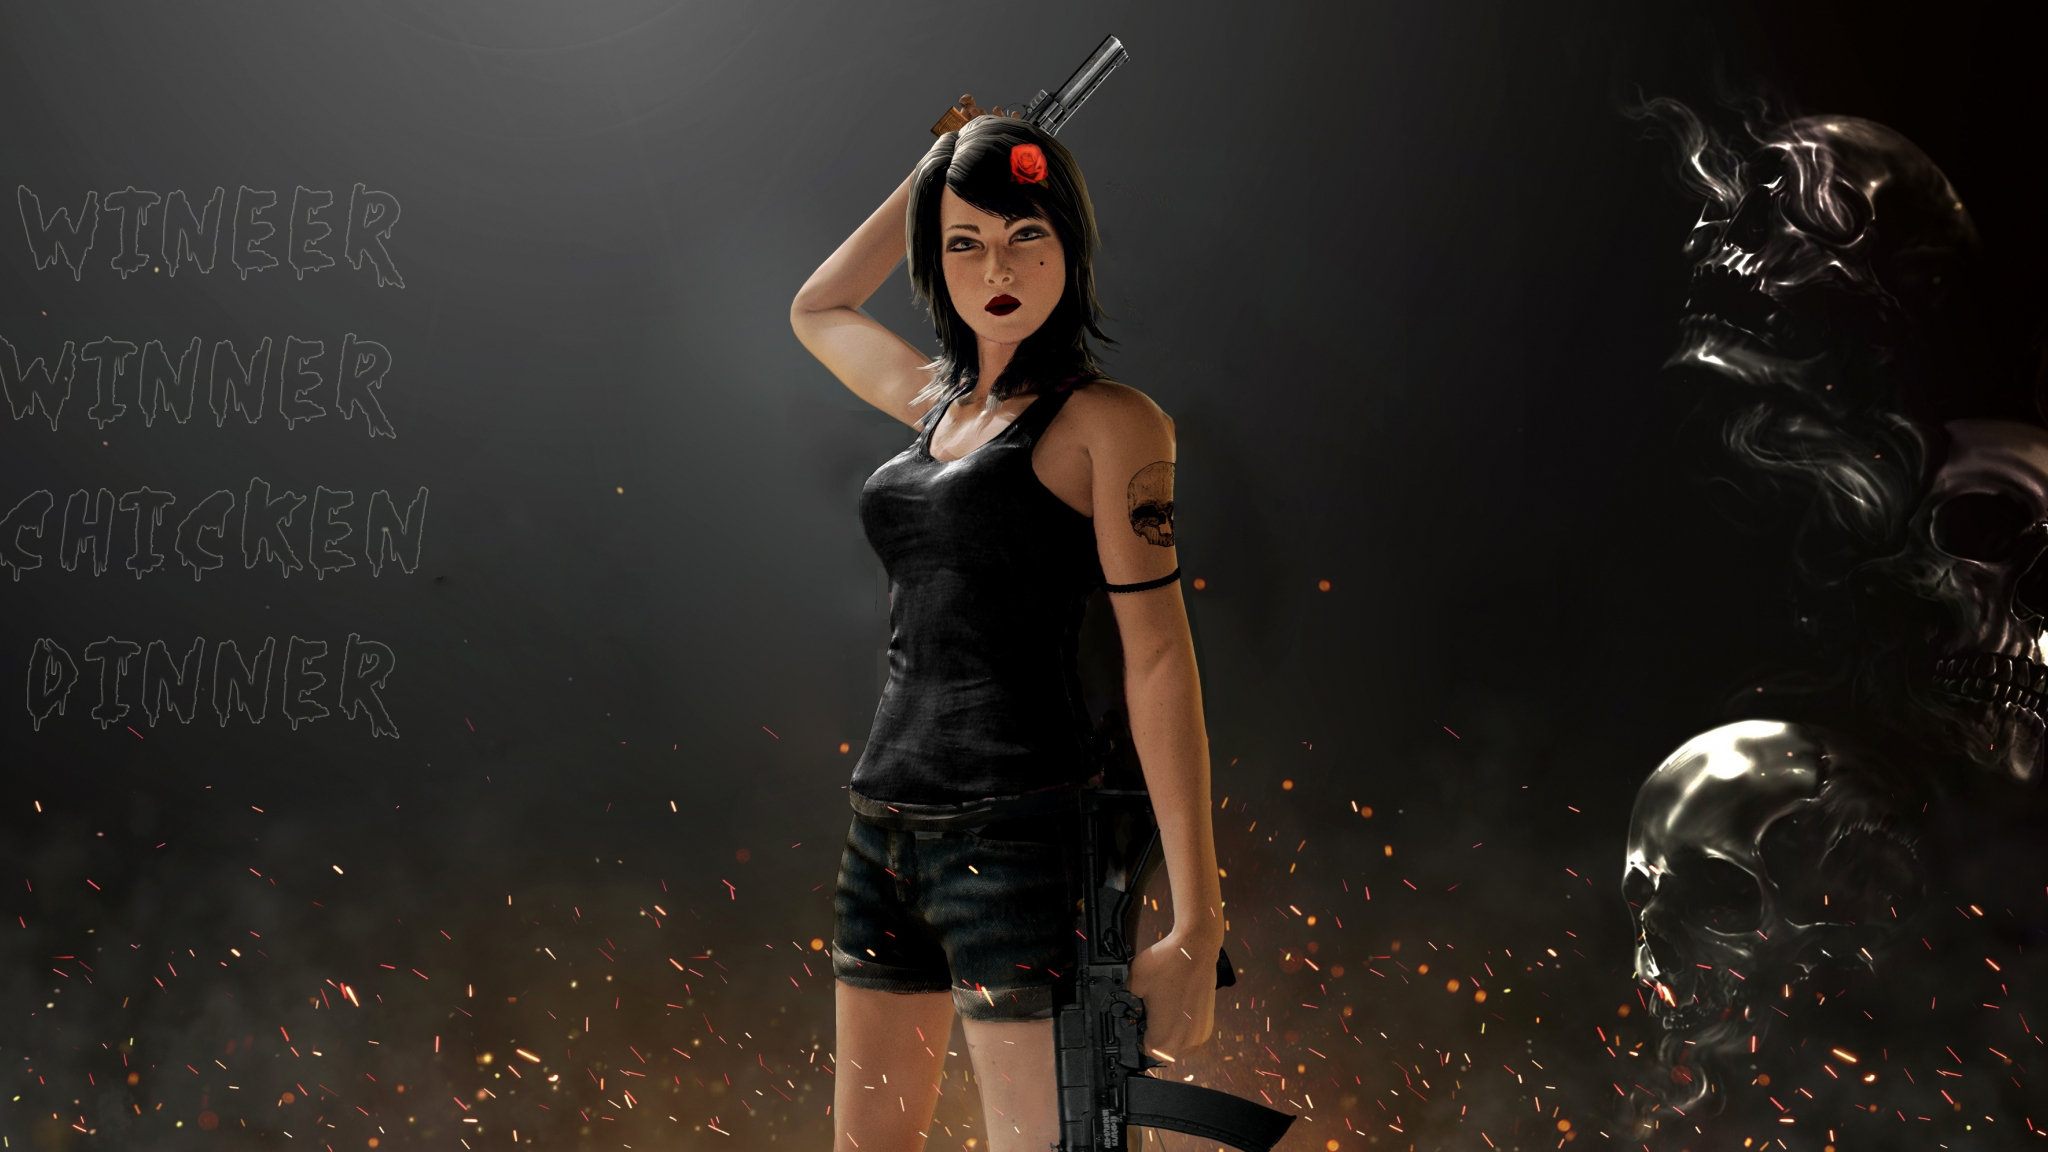 Download 2048x1152 Wallpaper Woman With Guns Pubg Gaming